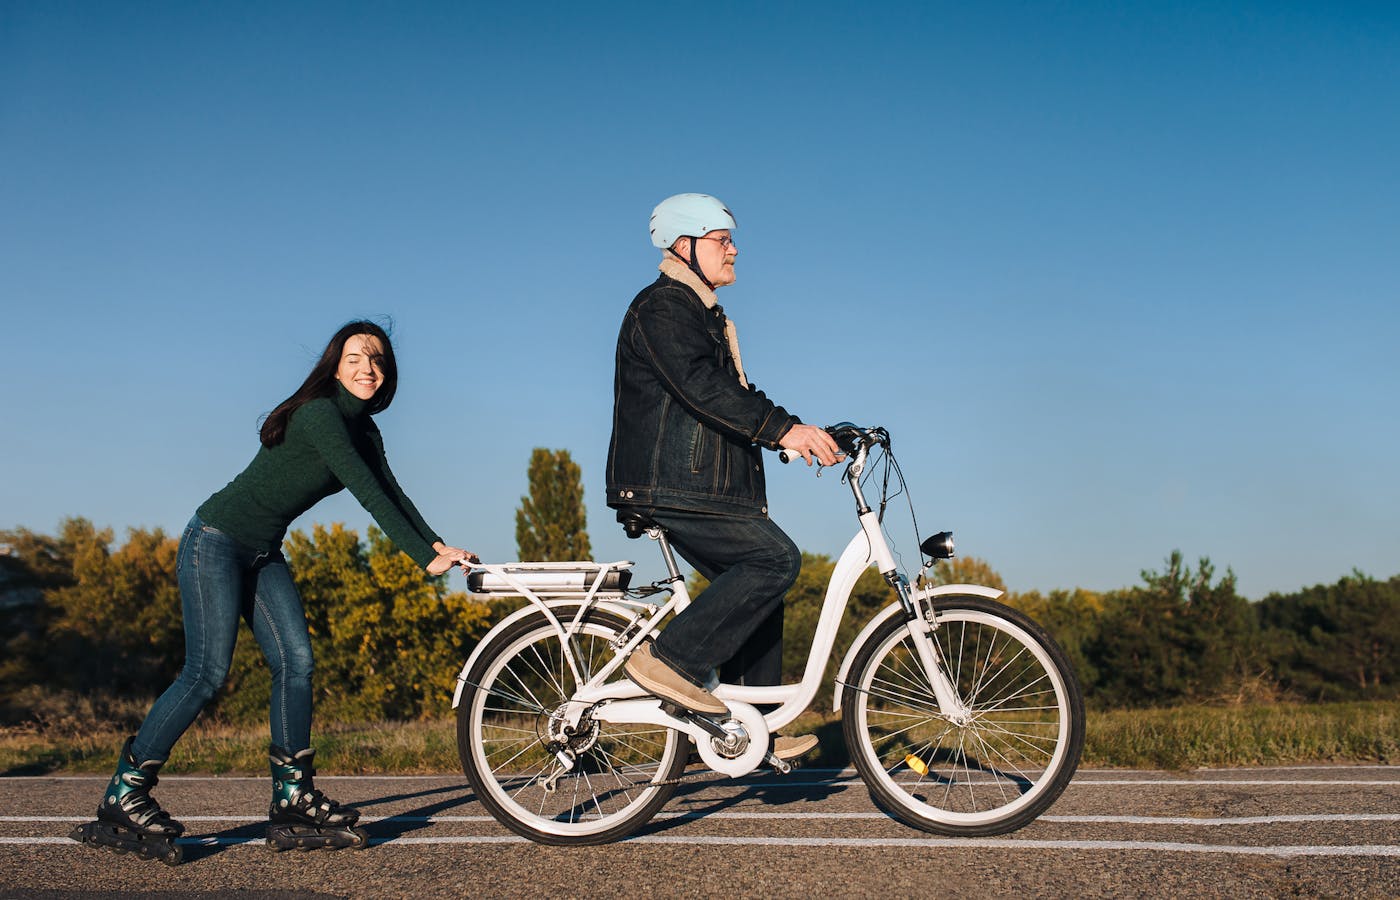 E-bike vs Smart Bike: What's right for you?